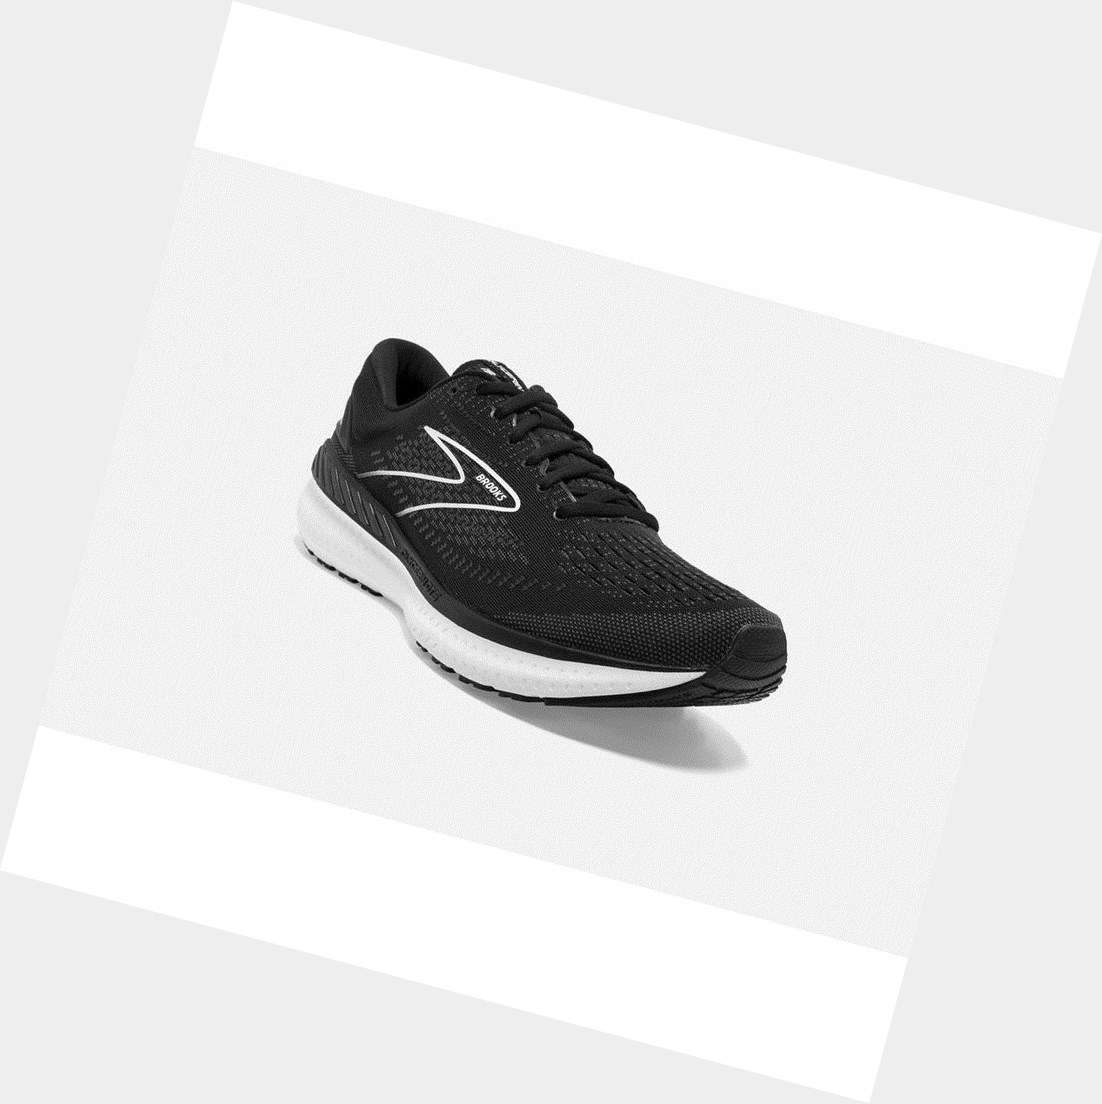 Brooks Glycerin GTS 19 Women's Road Running Shoes Black / White | DBSR-38674